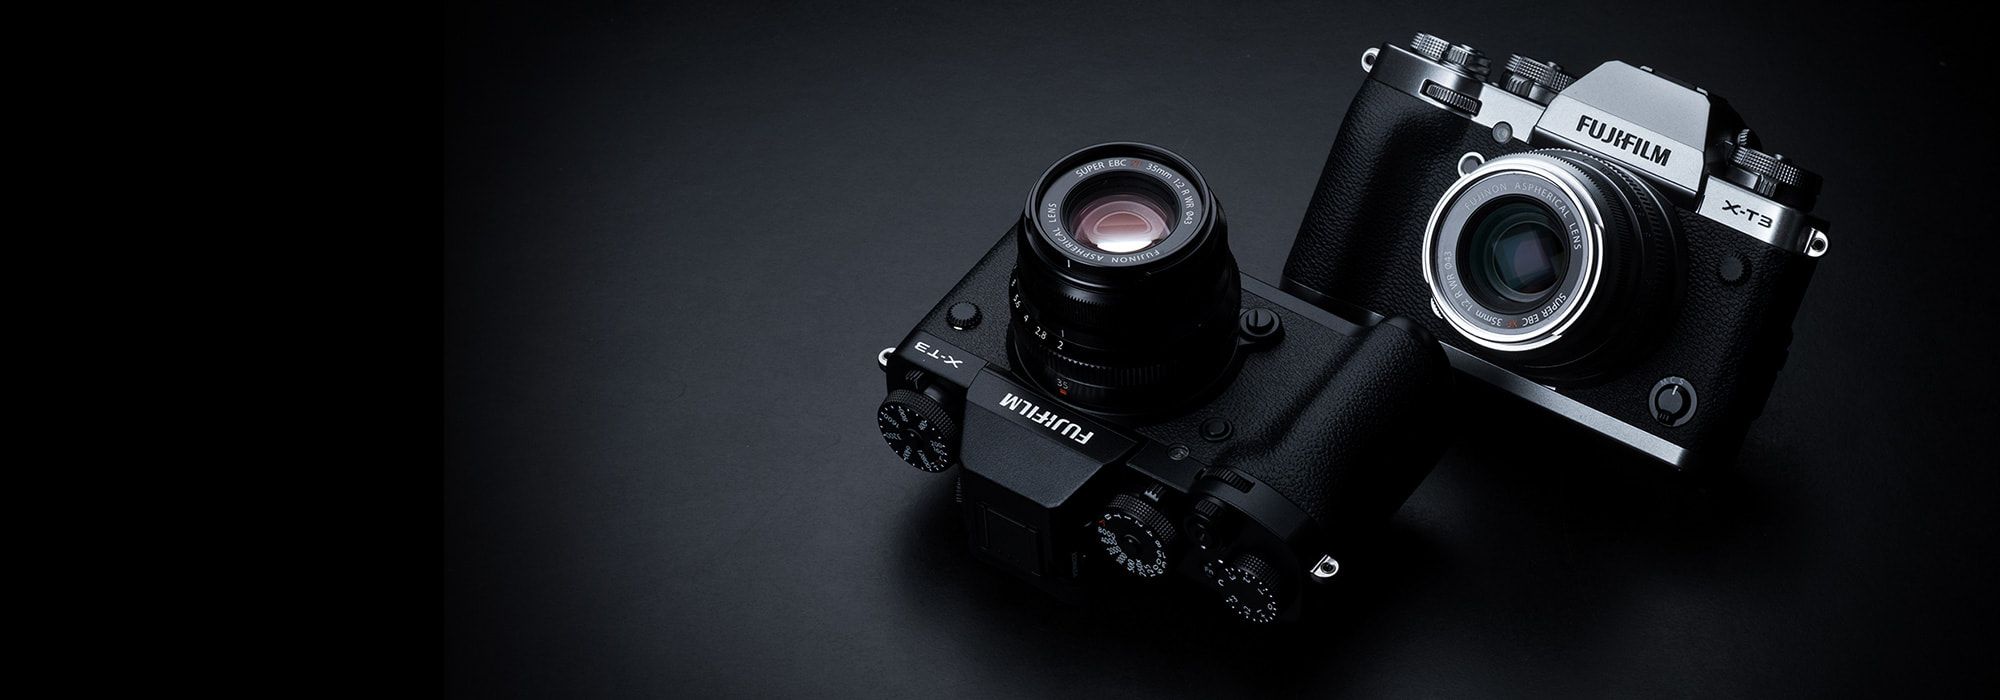 Fujifilm X-T3 camera models